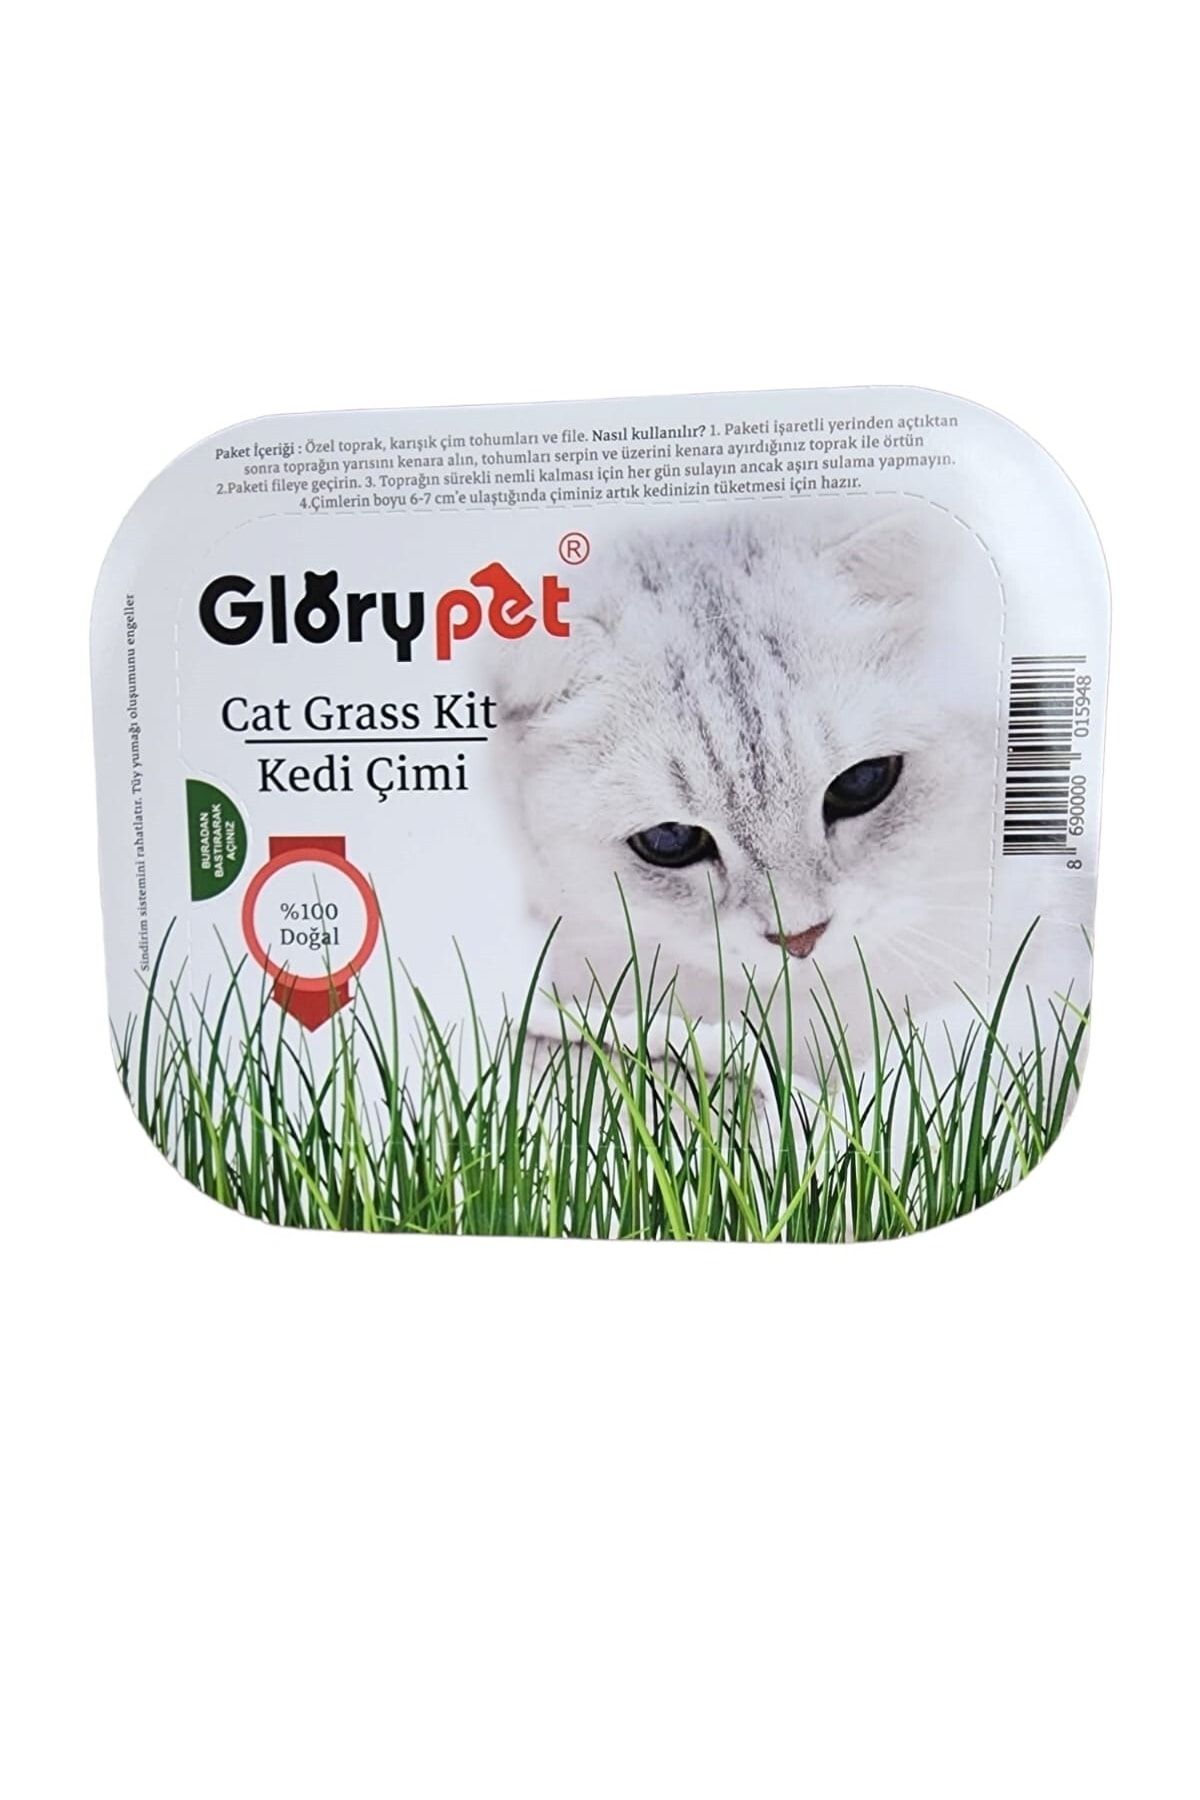 Magic Sand Gıory Pet Cat Grass Kit %100 Doğal Fileli Kedi Çimi (tüy Yumağı Önleyici)